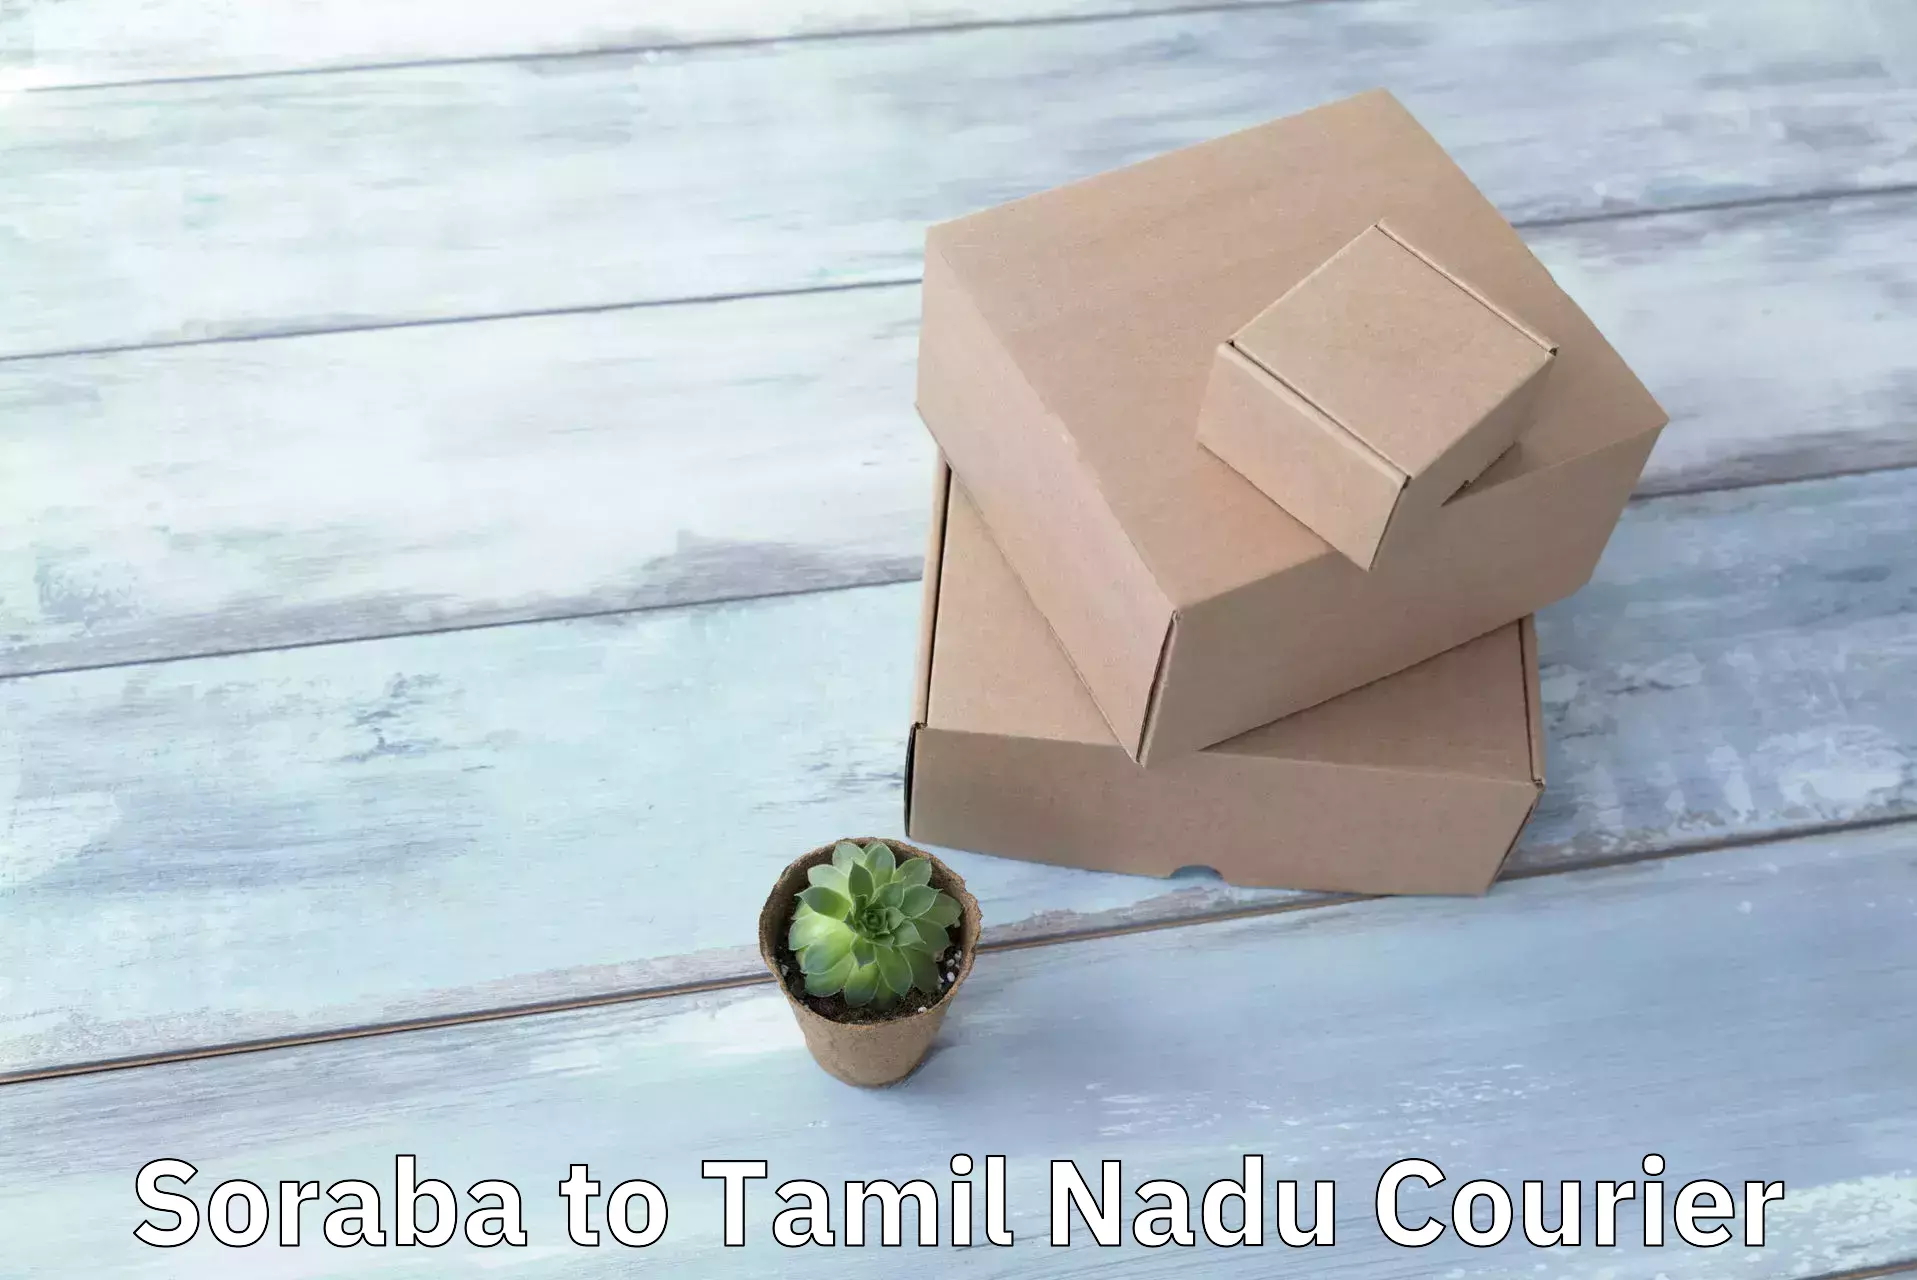 Efficient shipping operations Soraba to Tamil Nadu